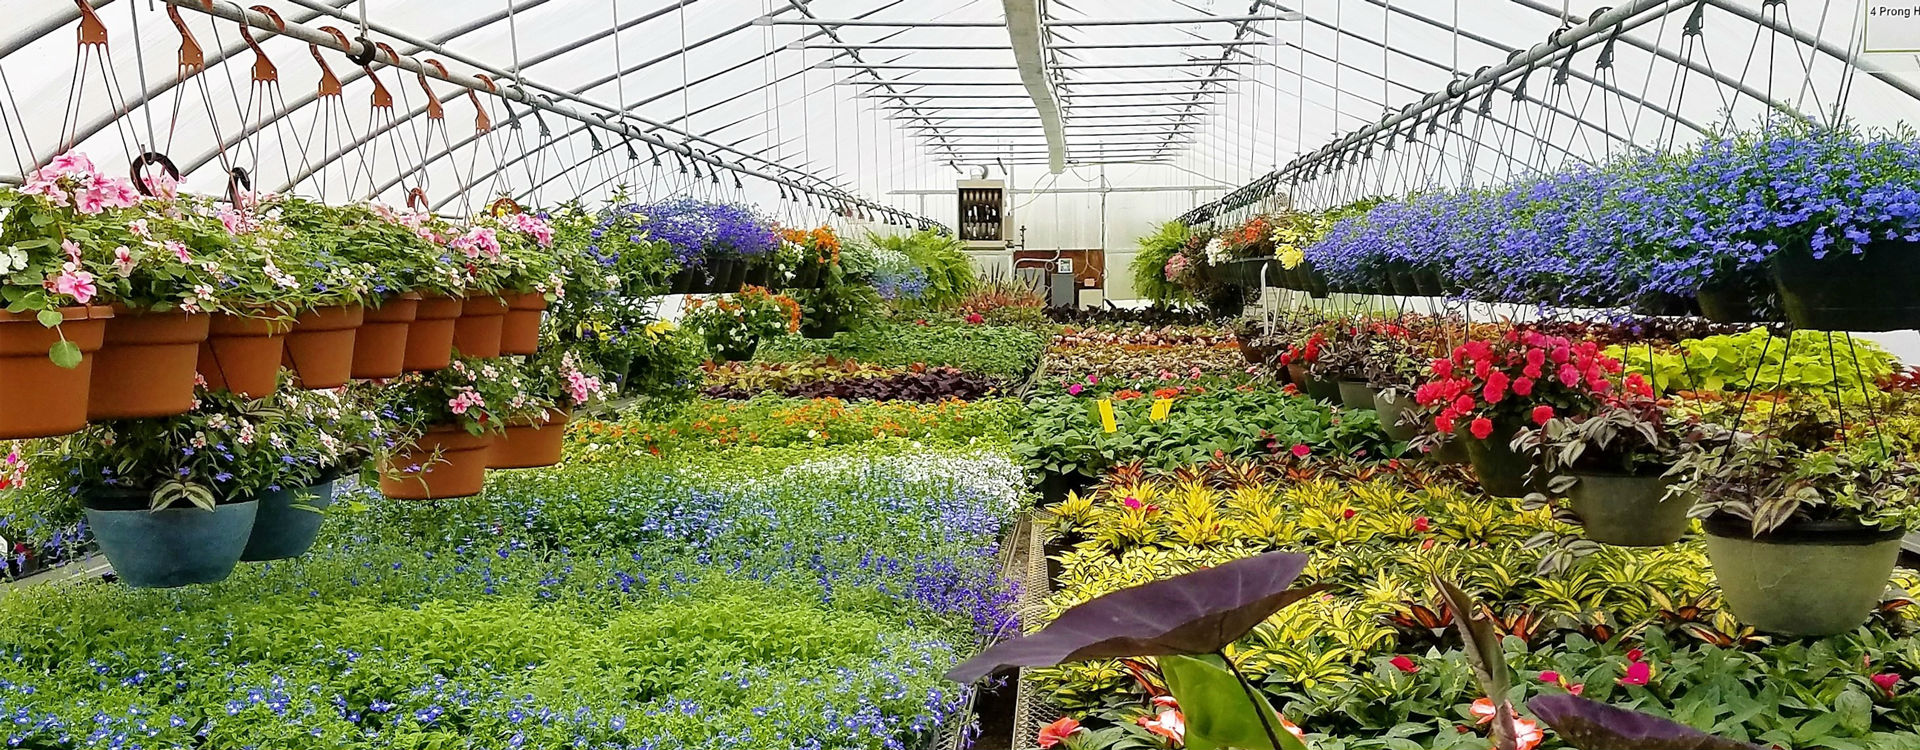 Garden Center-Planting Supplies | Forever Green-Iowa City ...